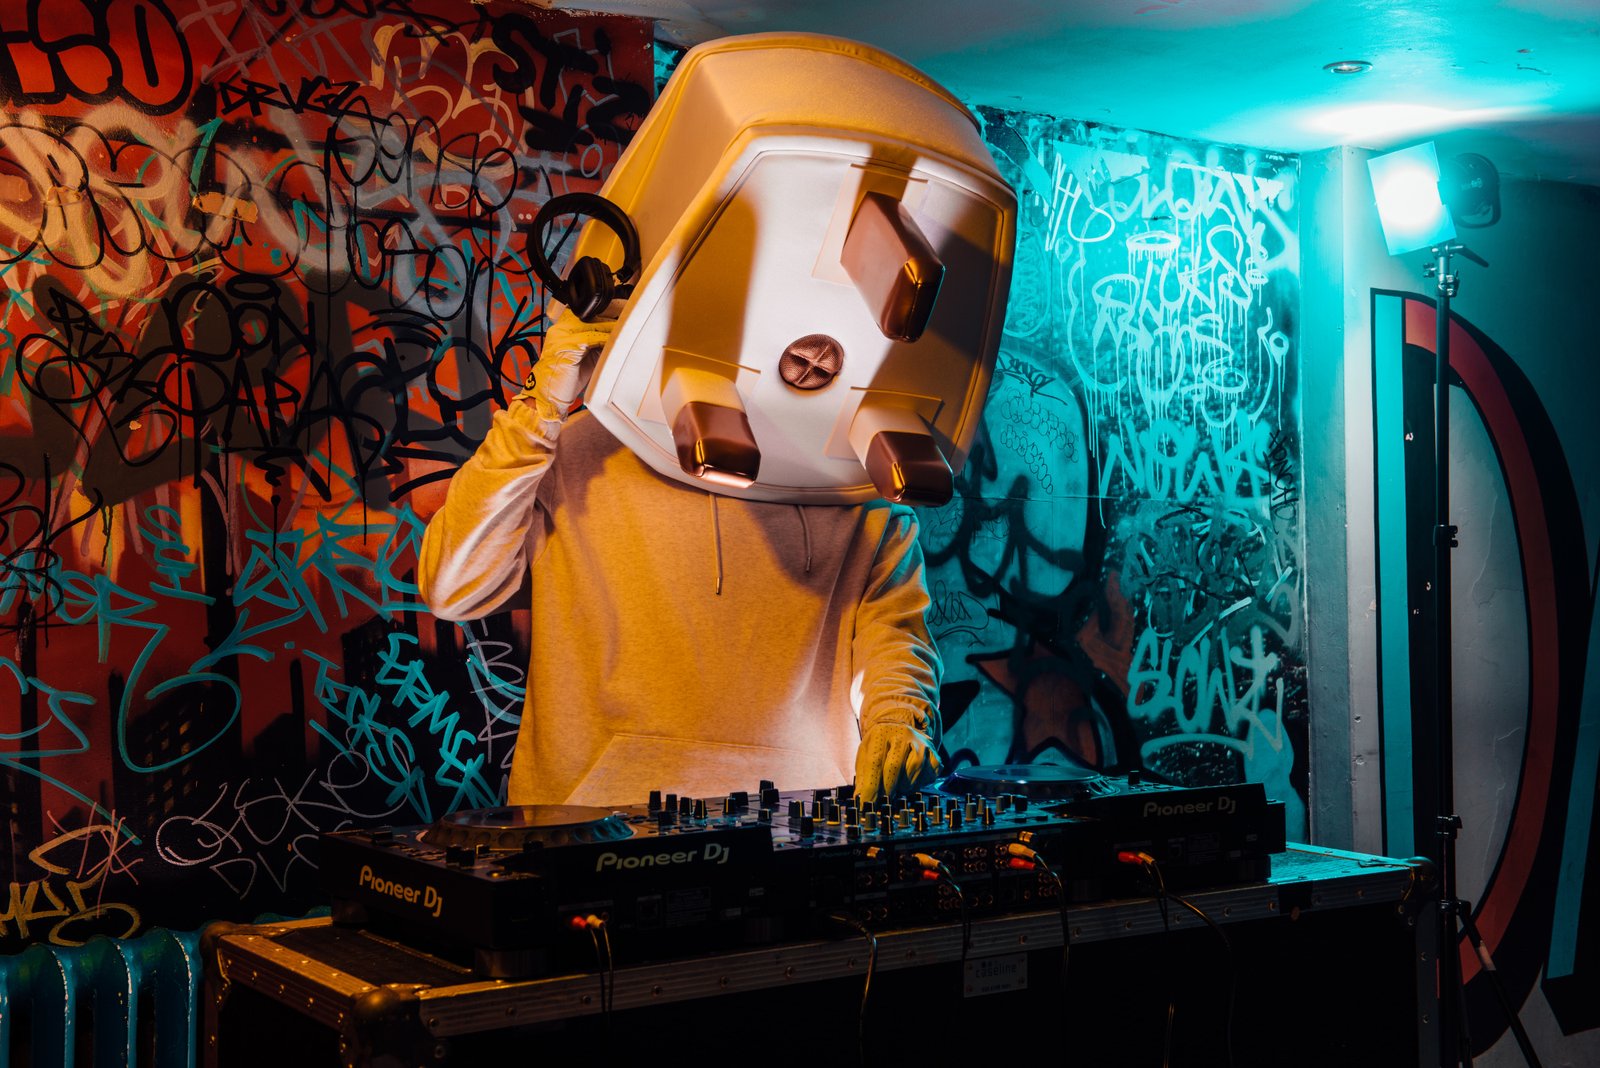 DJ Plugsy’s complete history of masked DJs